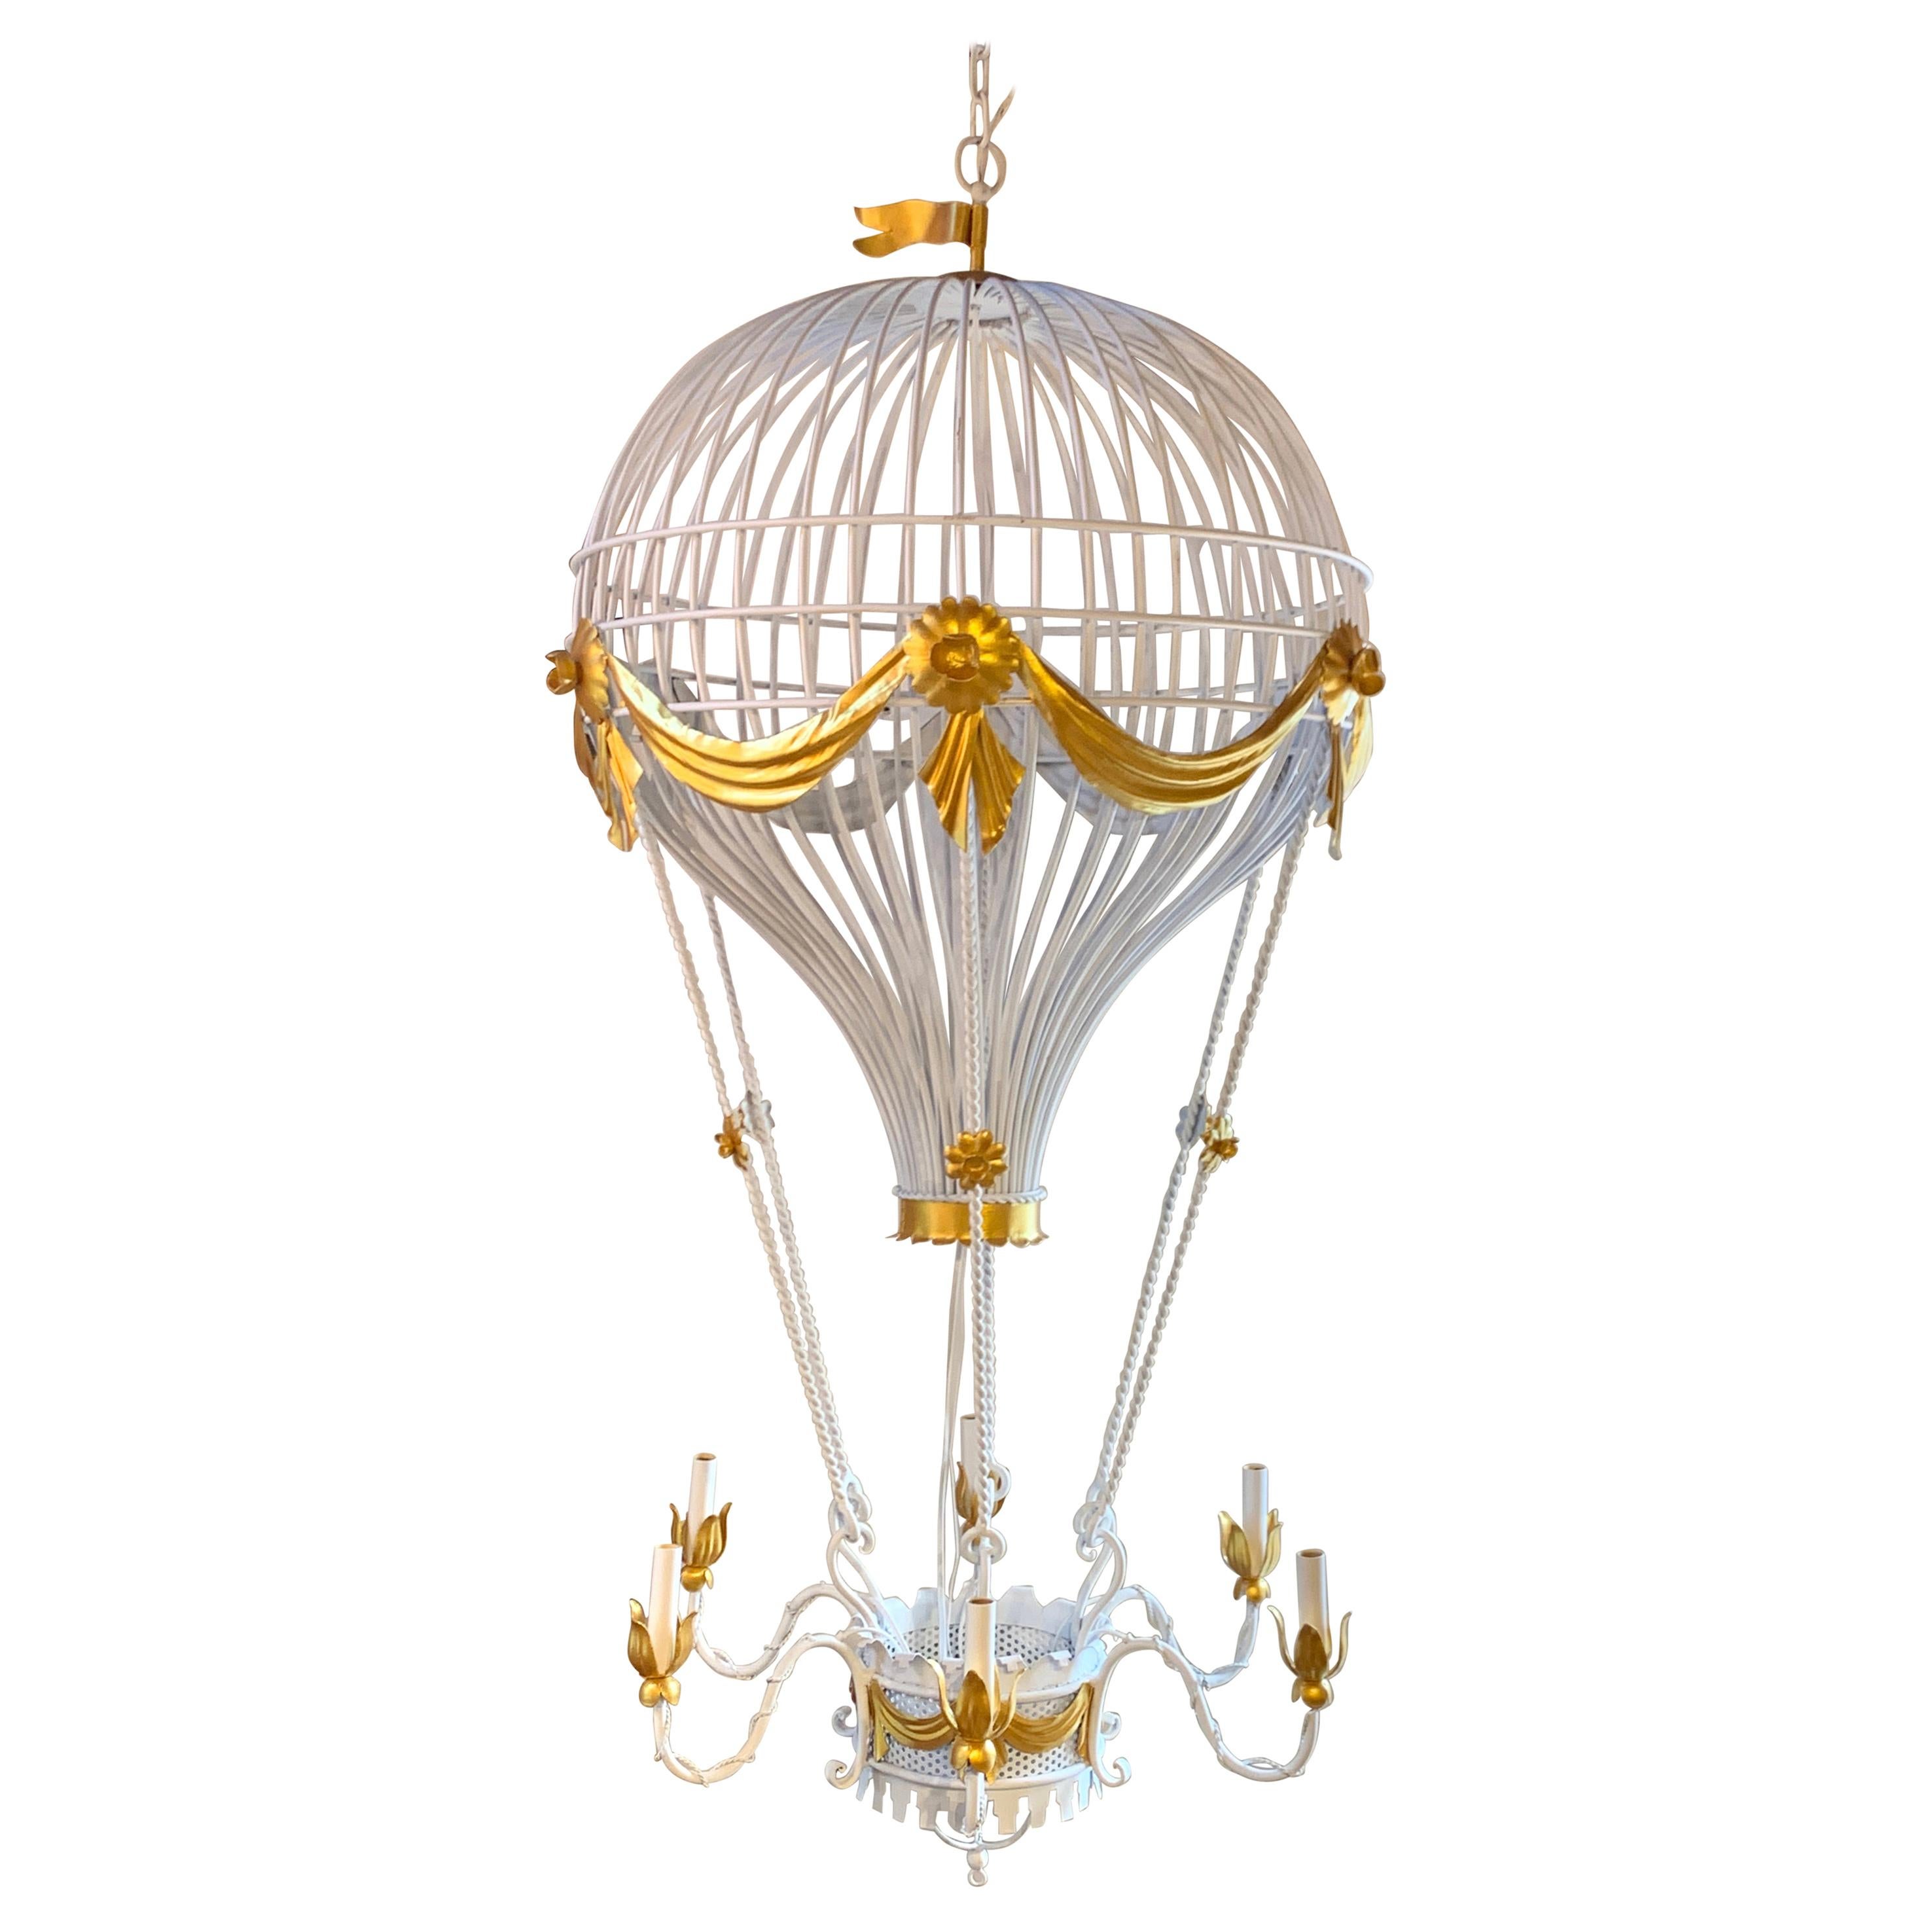 Stunning Italian Gilt & Polychromed Tole Hot Air Balloon Chandelier